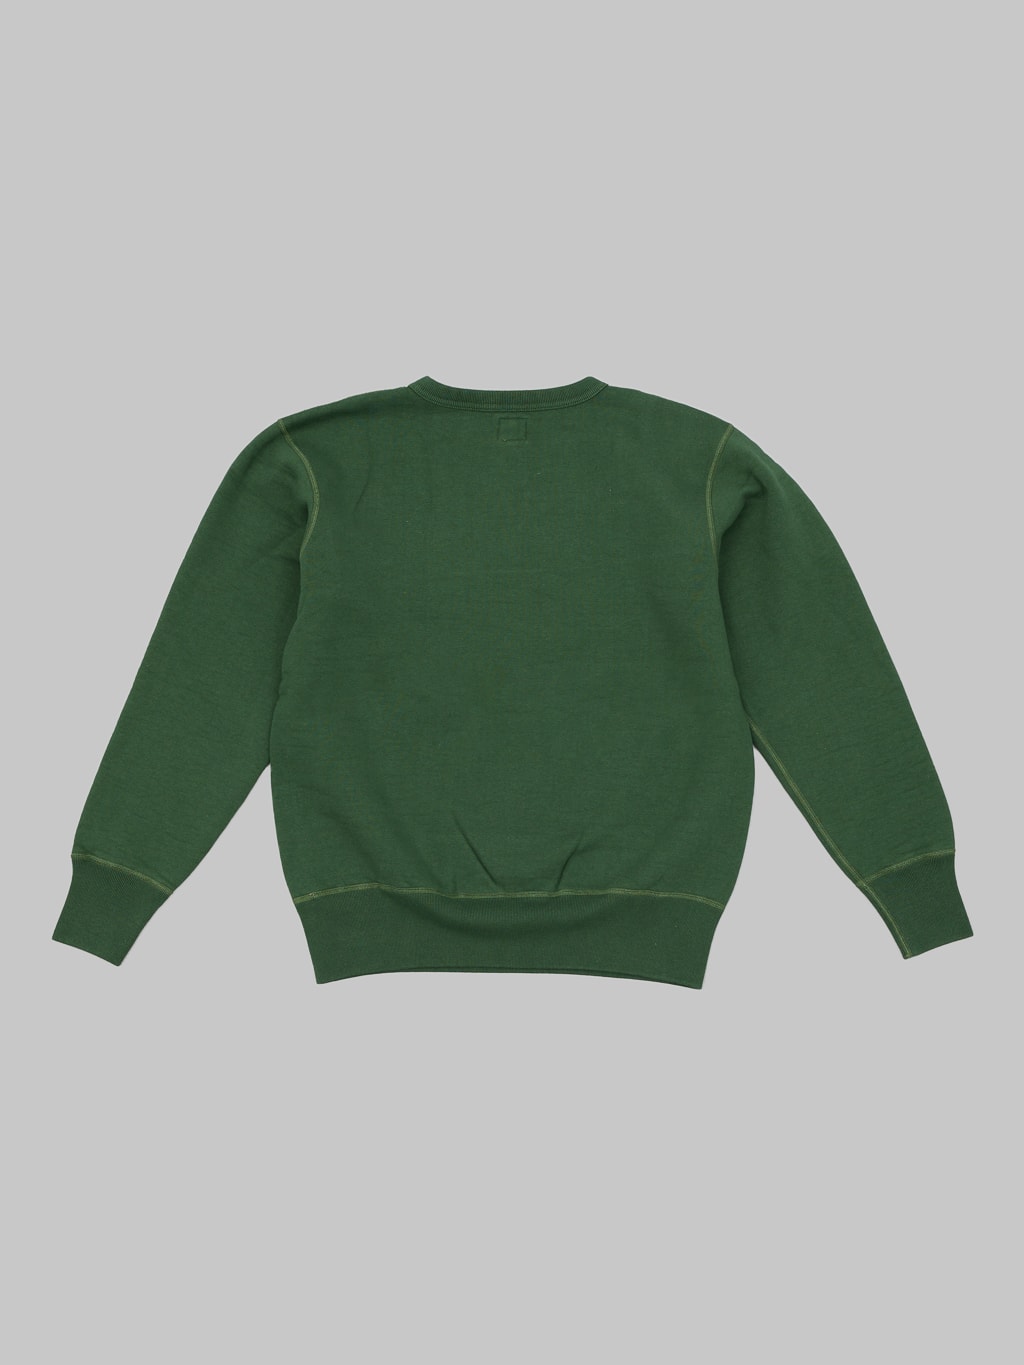 The Strike Gold Loopwheeled Sweatshirt Green back